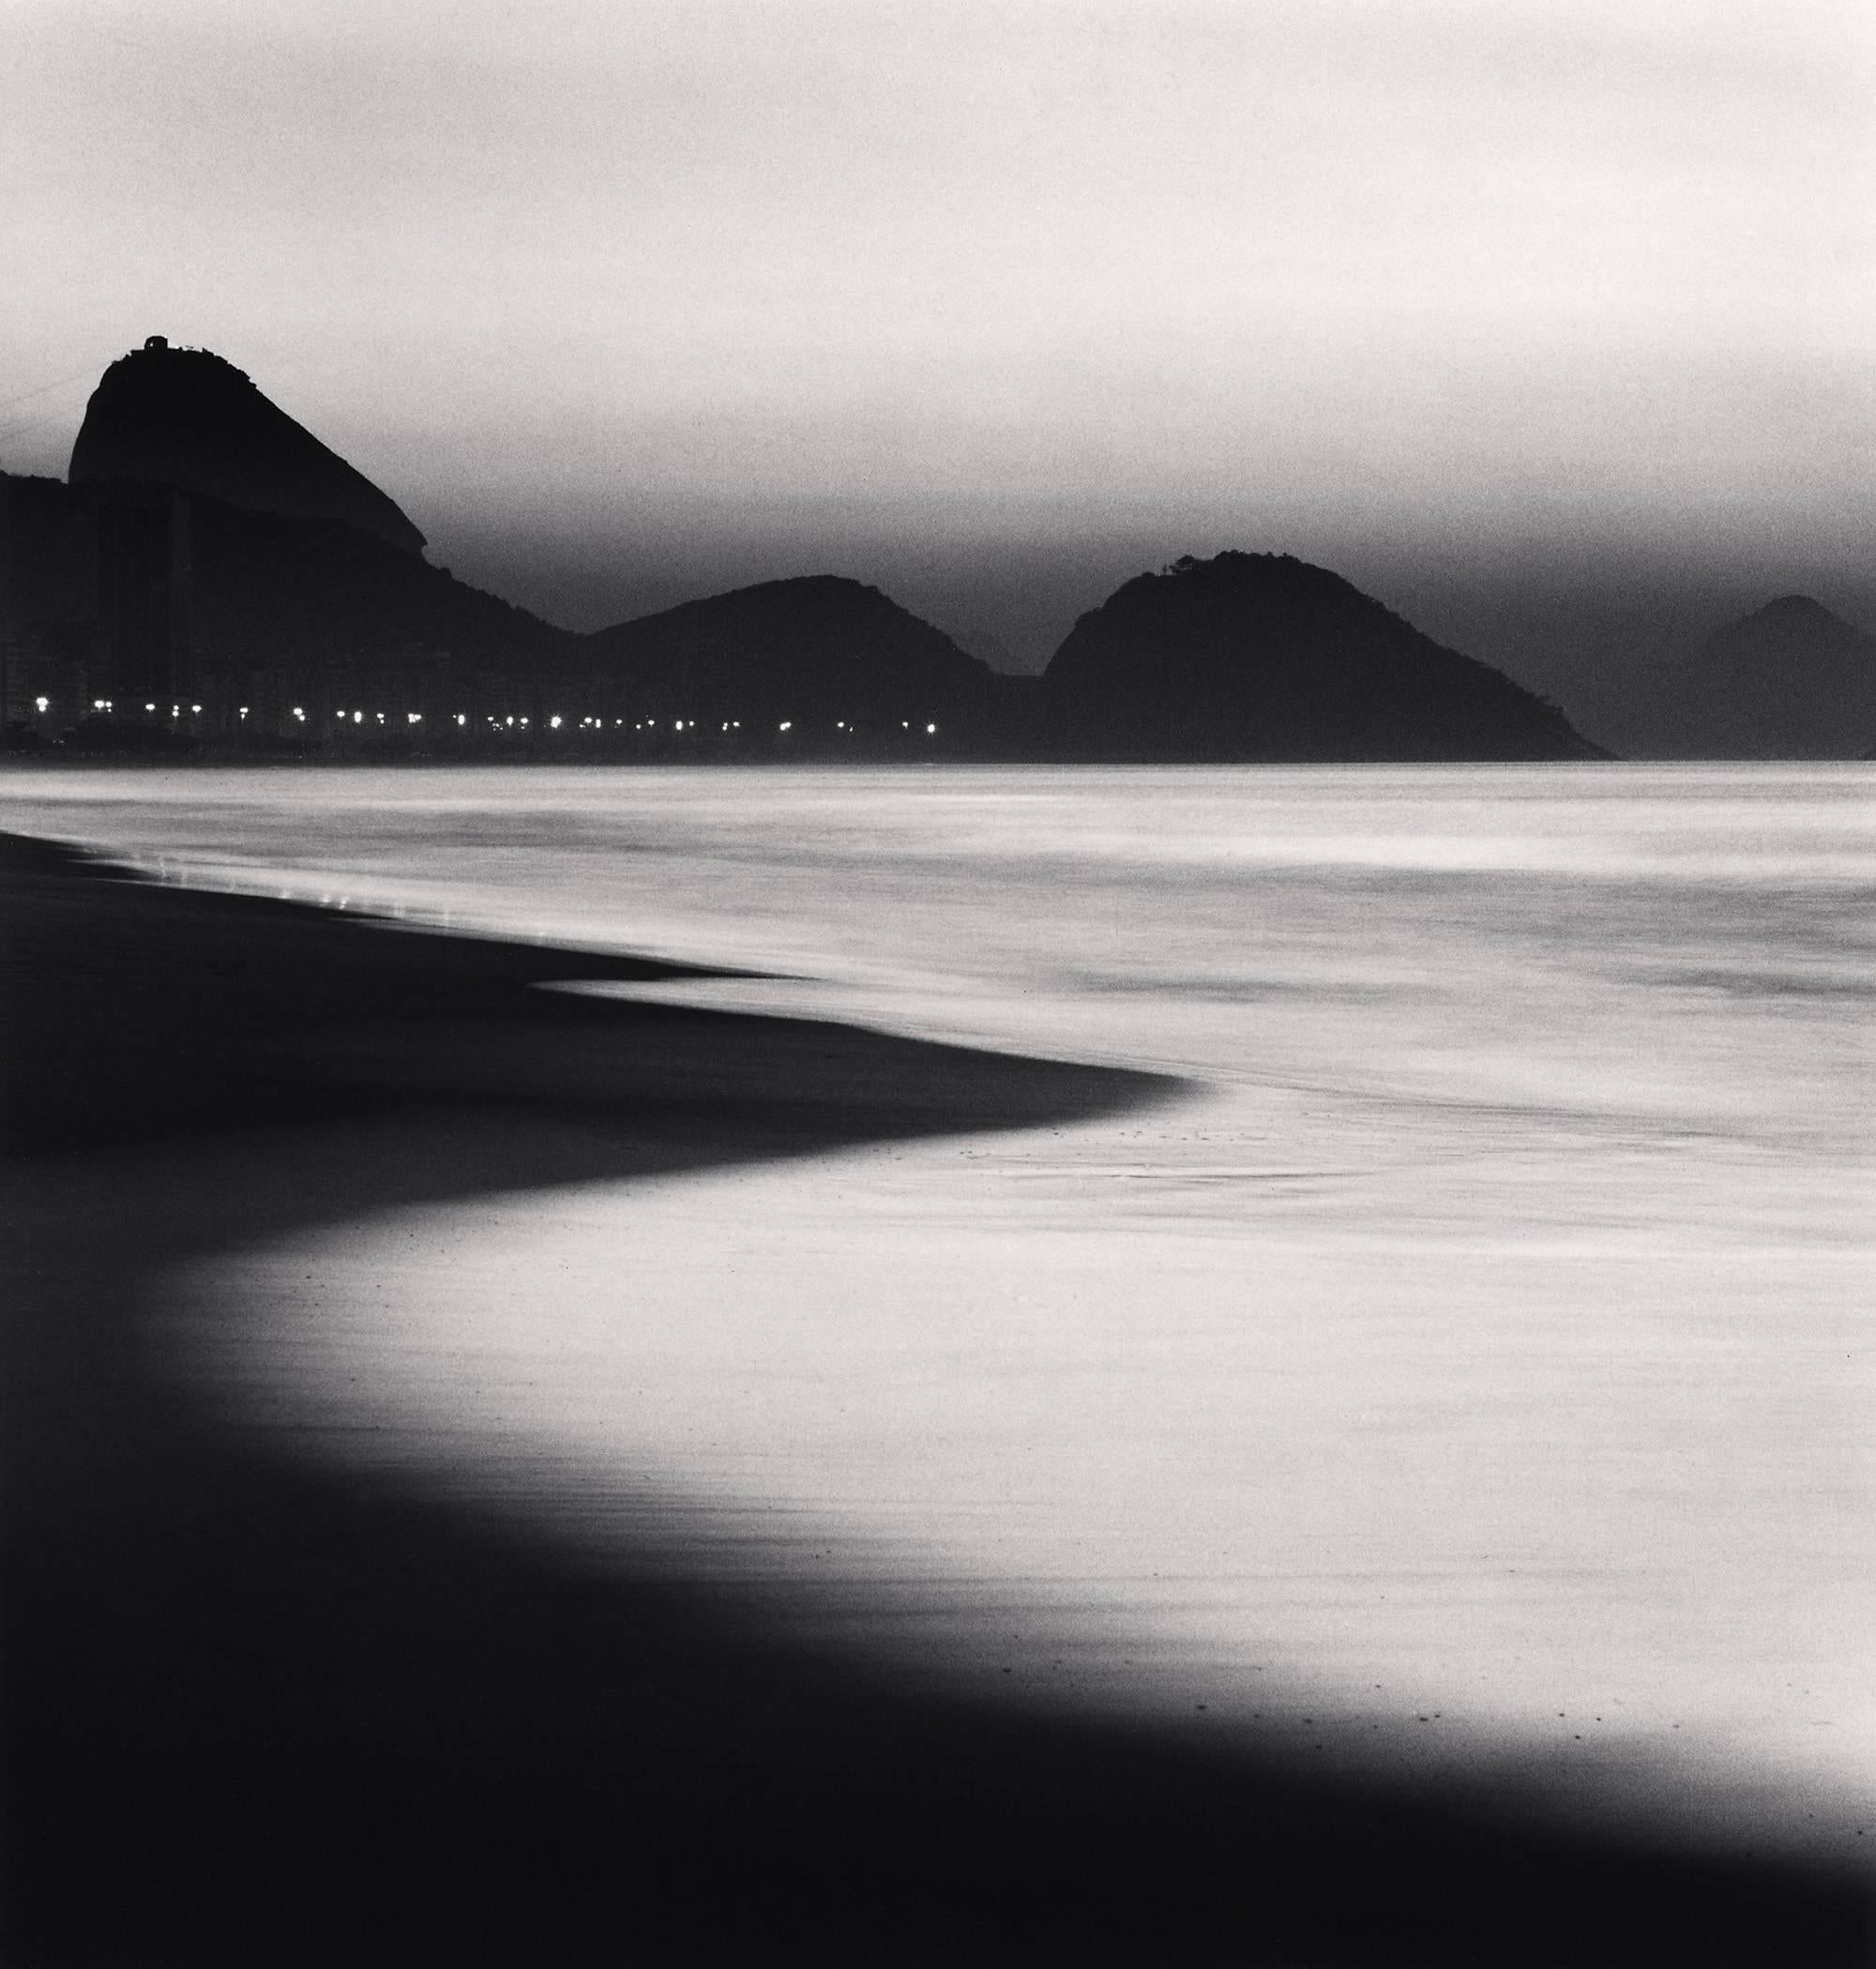 Michael Kenna Landscape Photograph - Copacabana Beach, Rio de Janeiro, Brazil